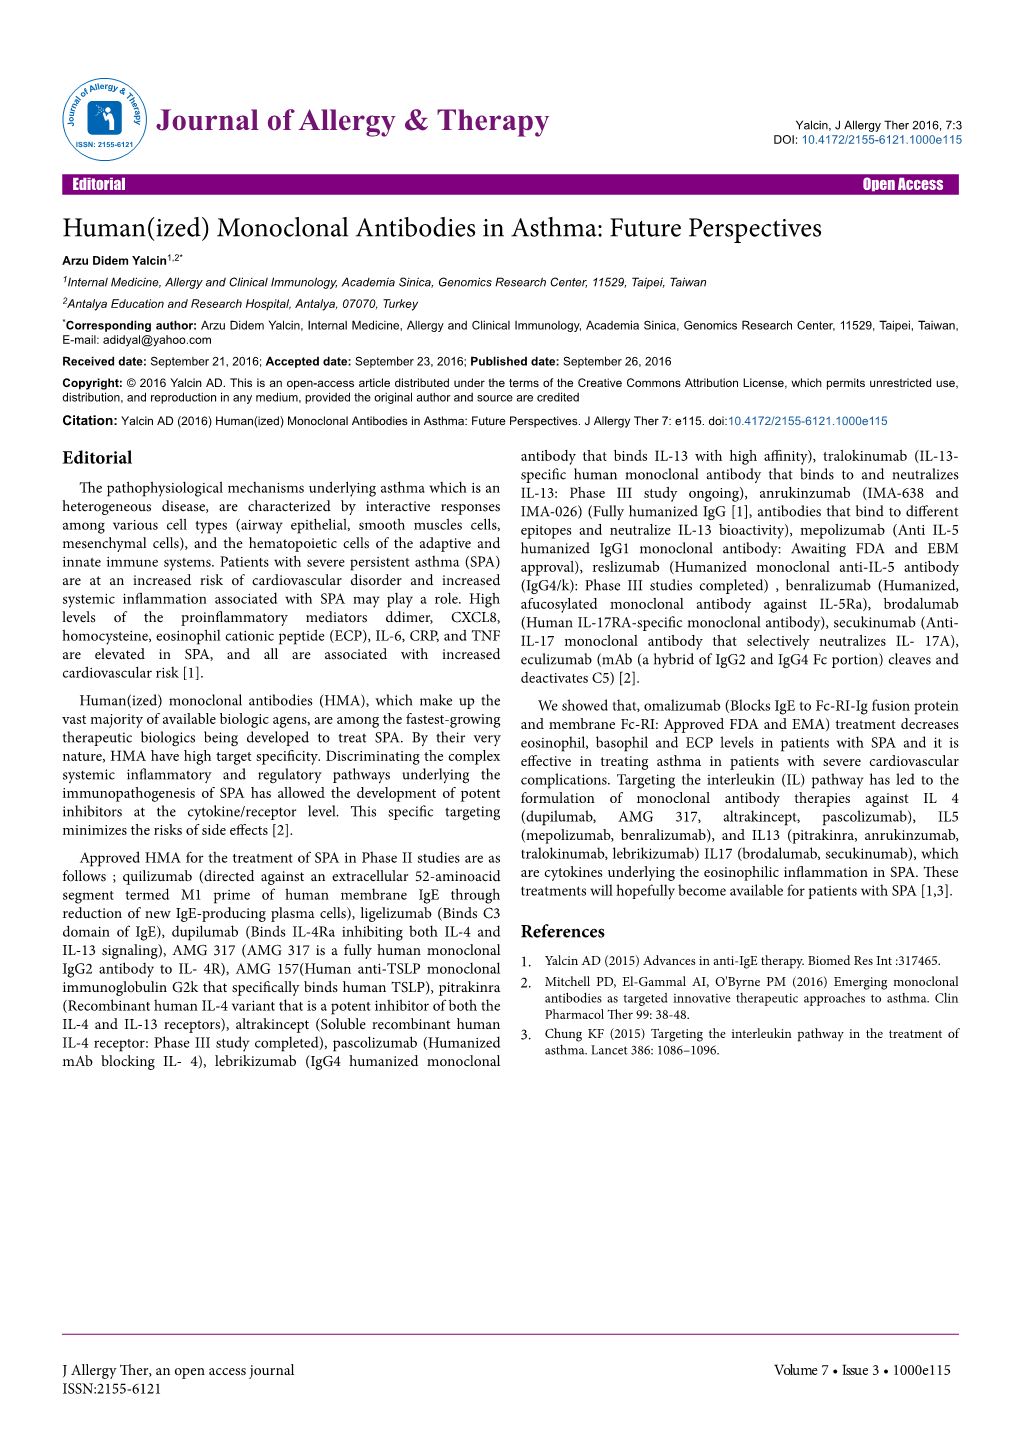 Monoclonal Antibodies in Asthma